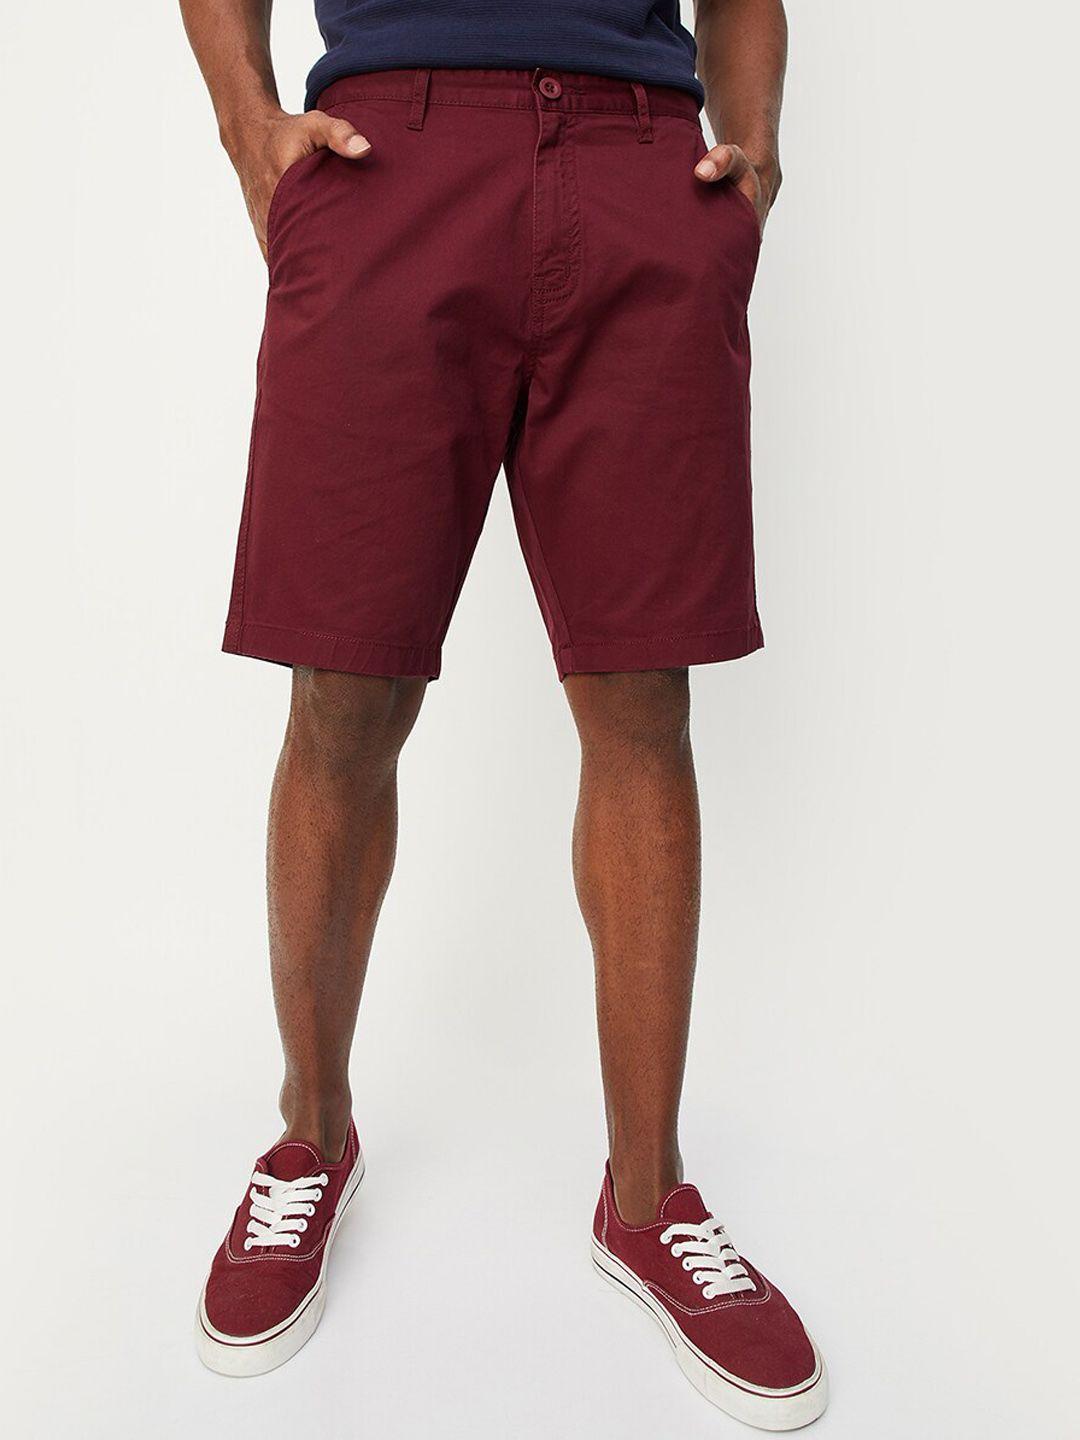 max-men-red-sports-shorts